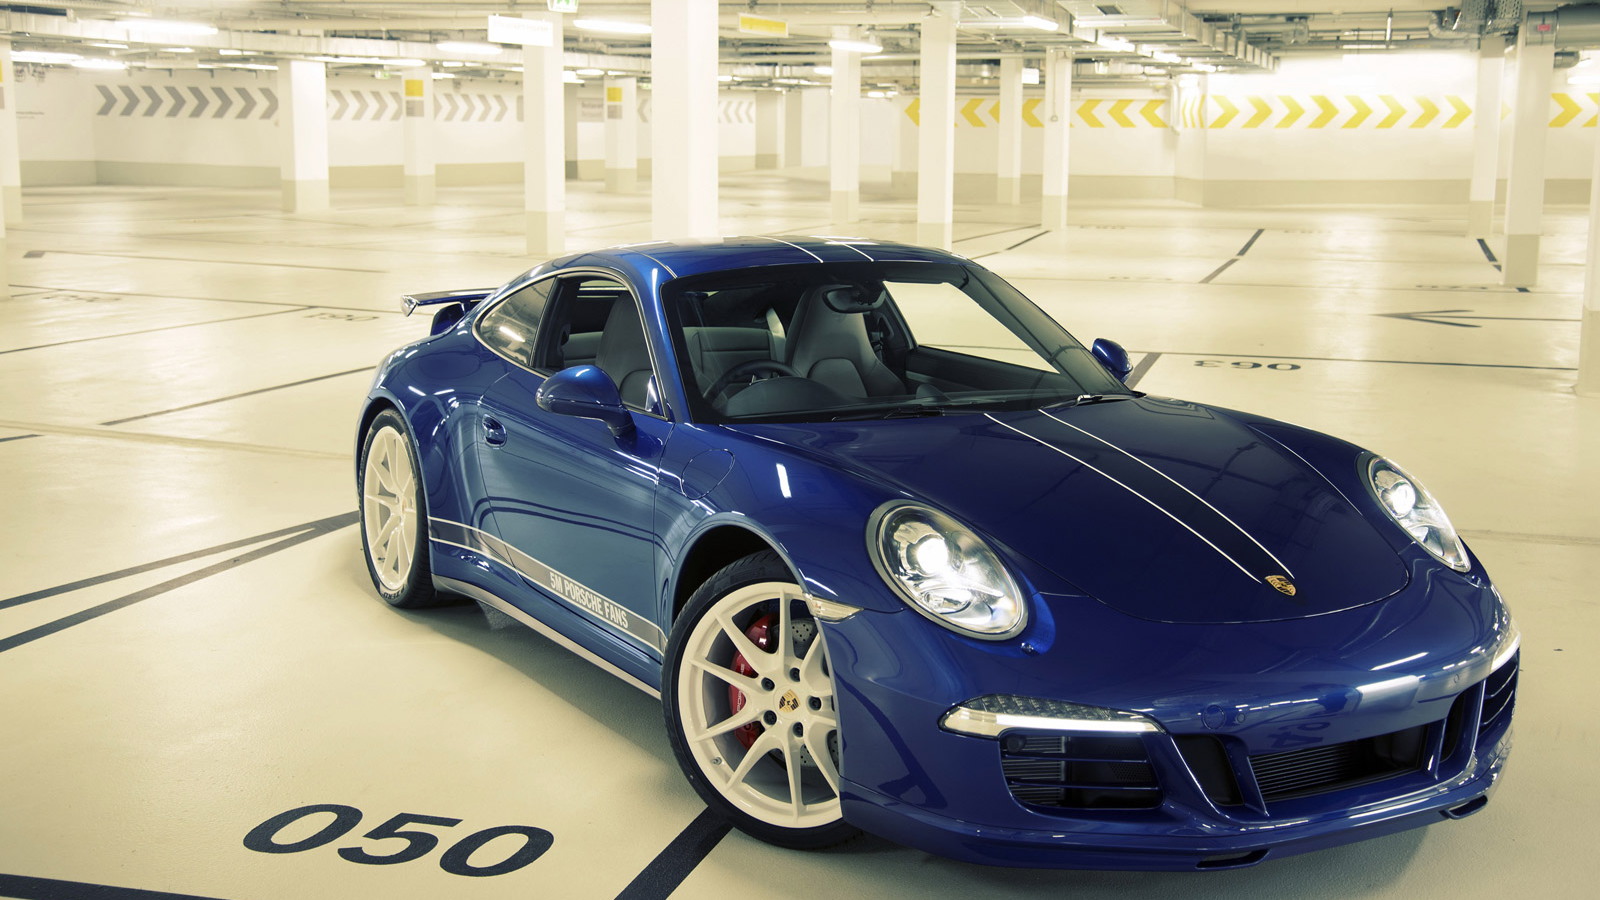 2013 Porsche 911 Carrera 4S ‘built’ by 5 million Facebook fans